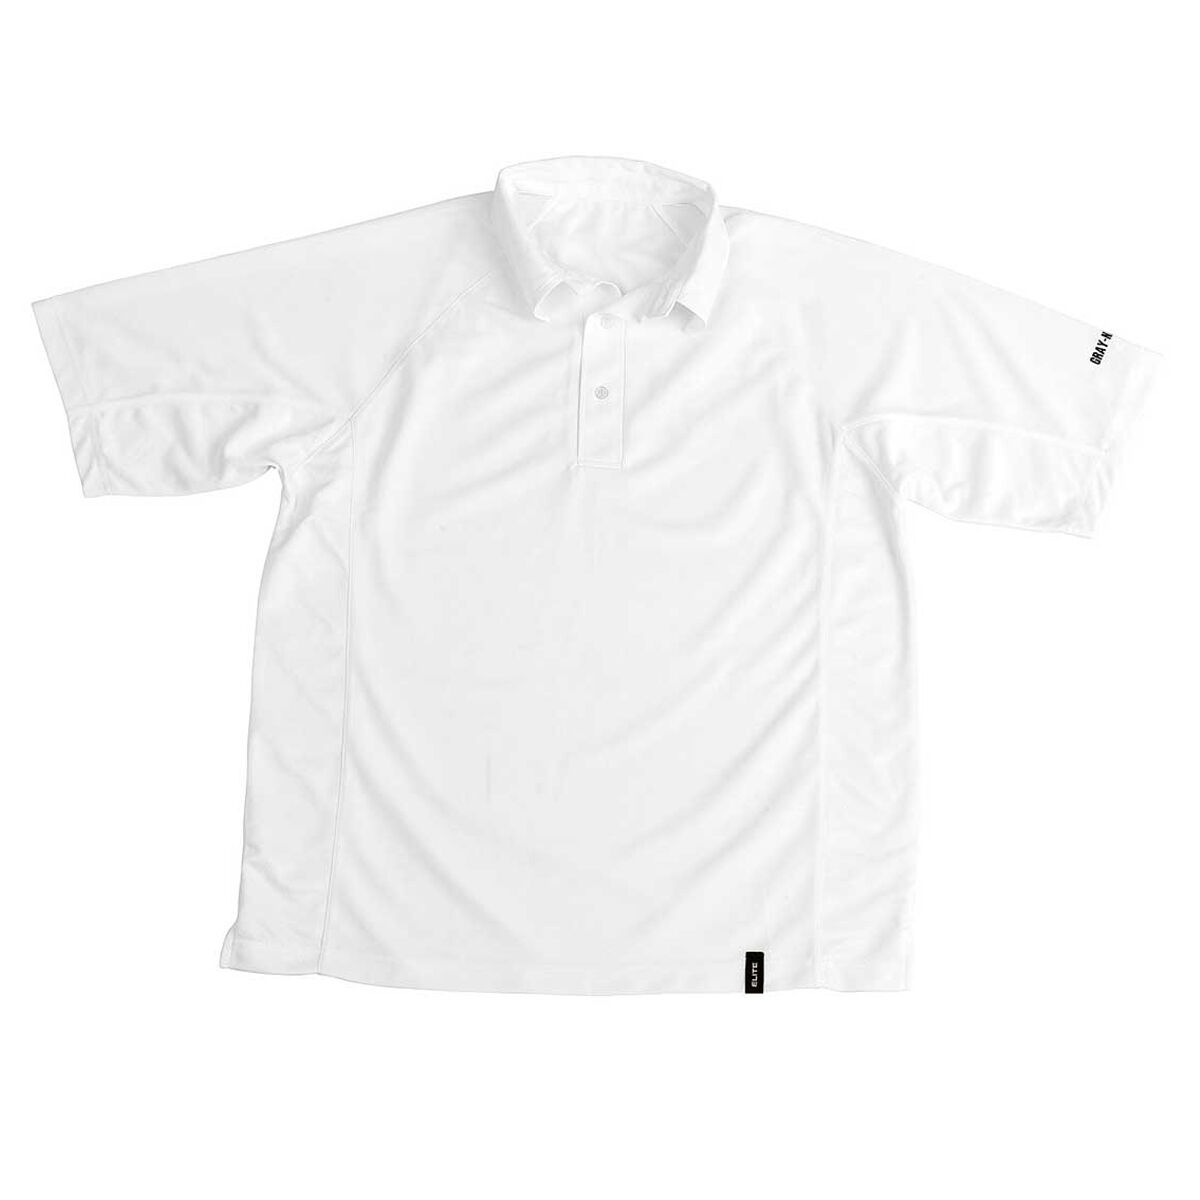 cricket t shirt white